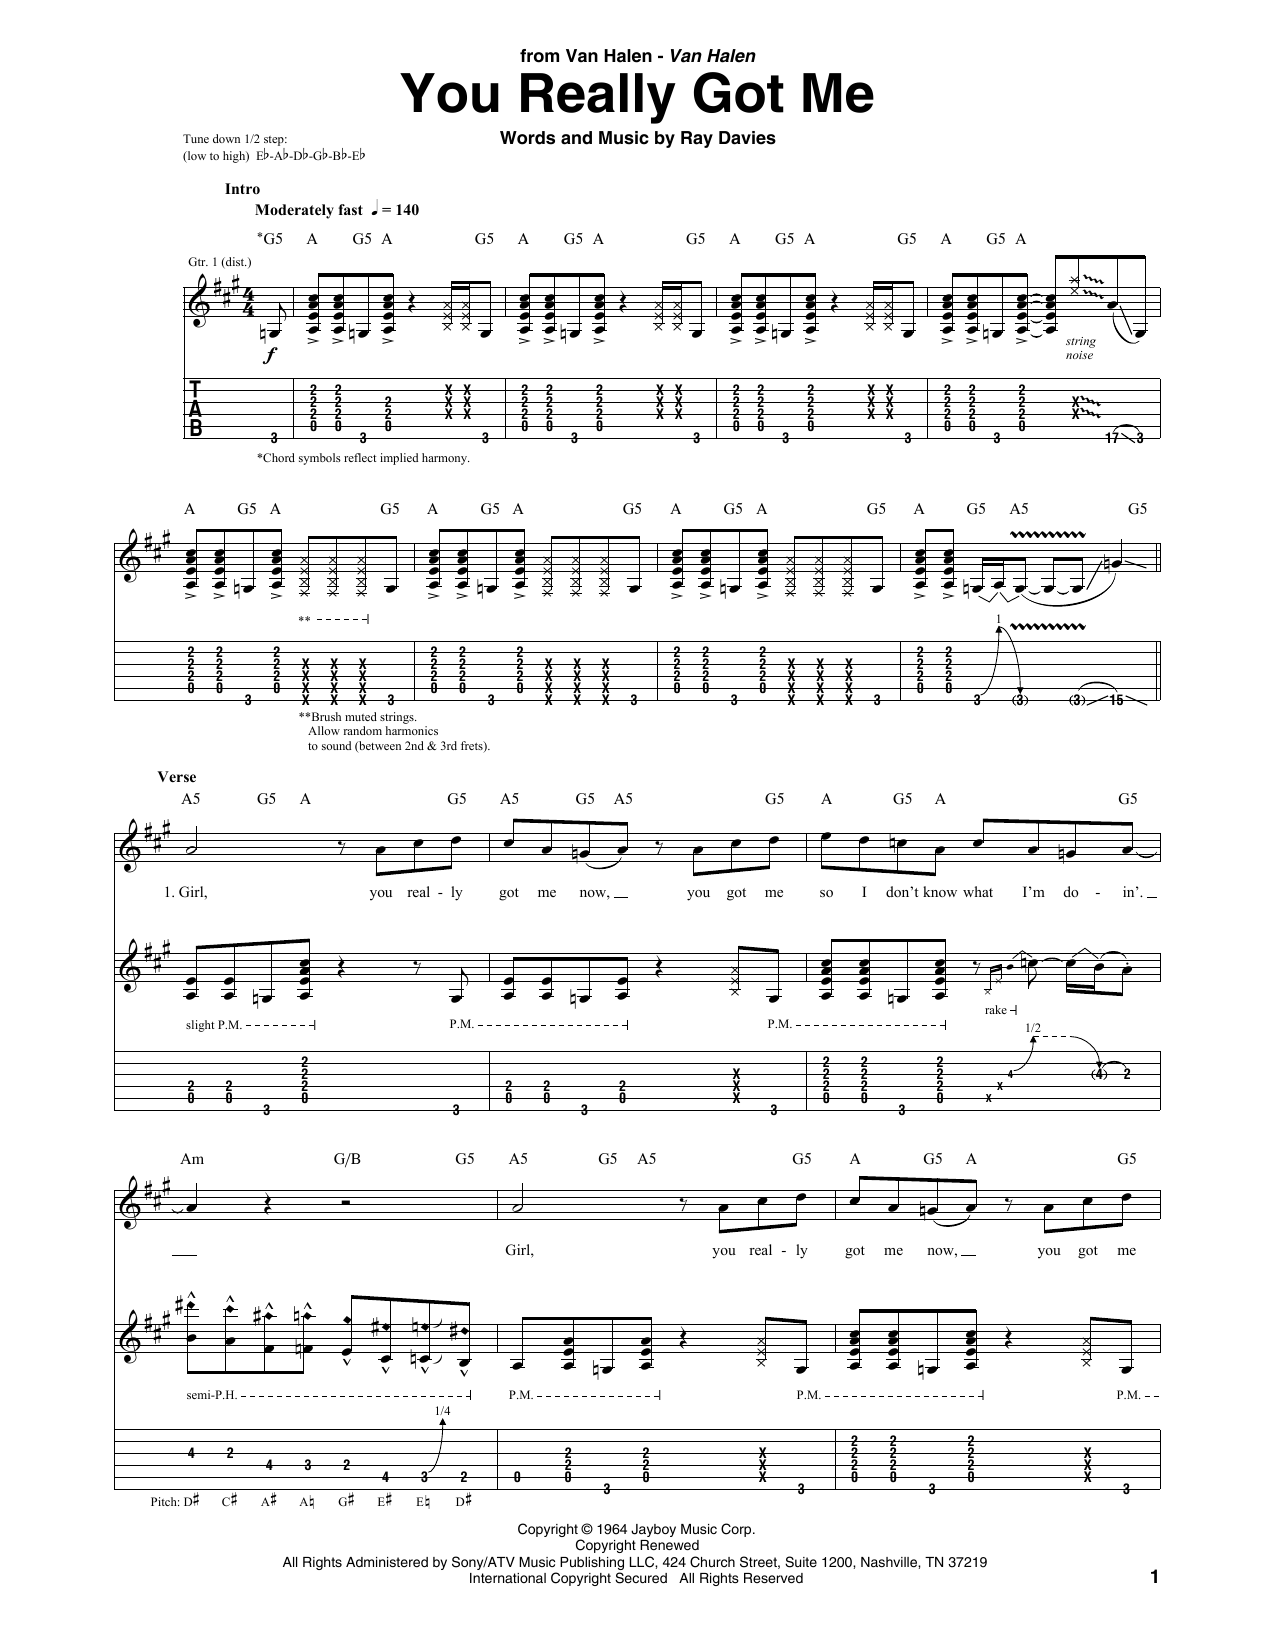 Van Halen You Really Got Me Sheet Music Notes & Chords for Guitar Tab (Single Guitar) - Download or Print PDF